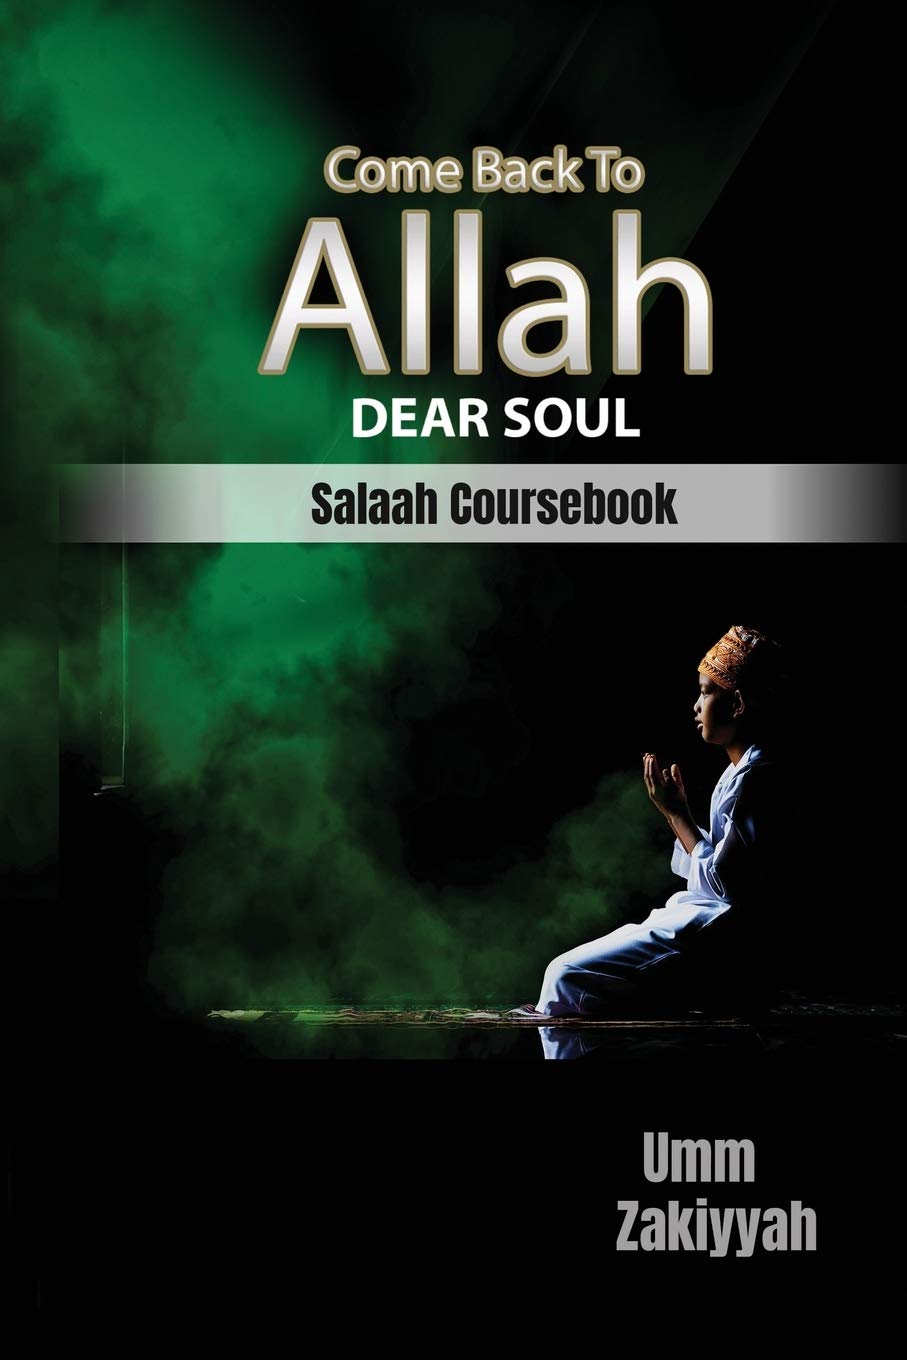 Come Back To Allah Dear Soul - A Salaah Coursebook